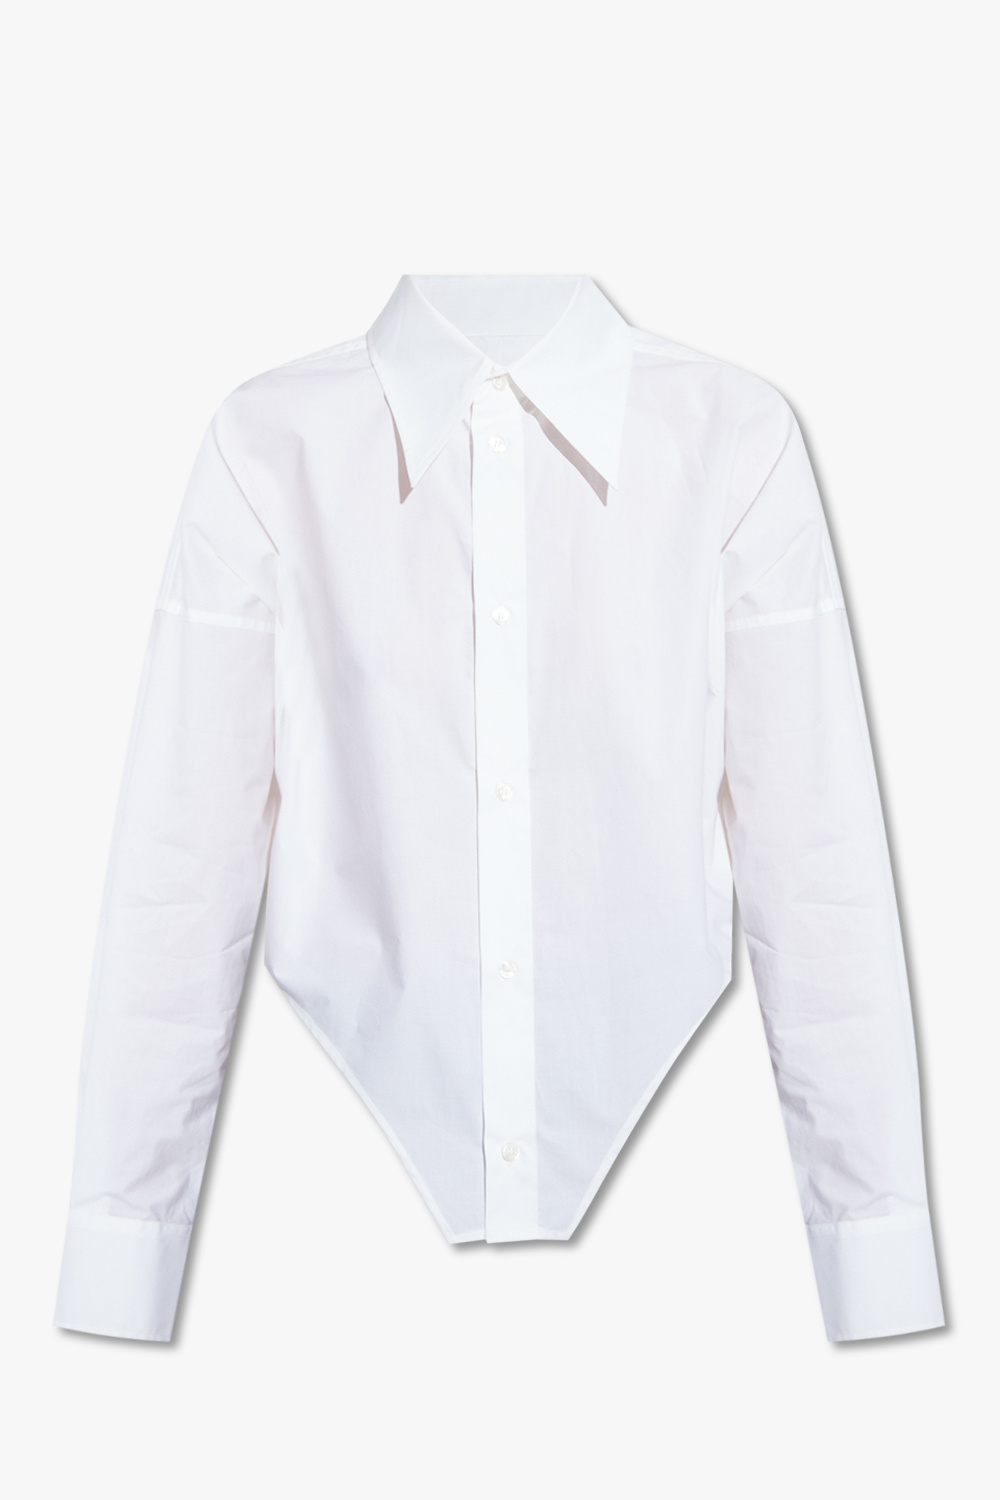 Bally stripe trim bomber jacket - White Shirt with asymmetrical ...